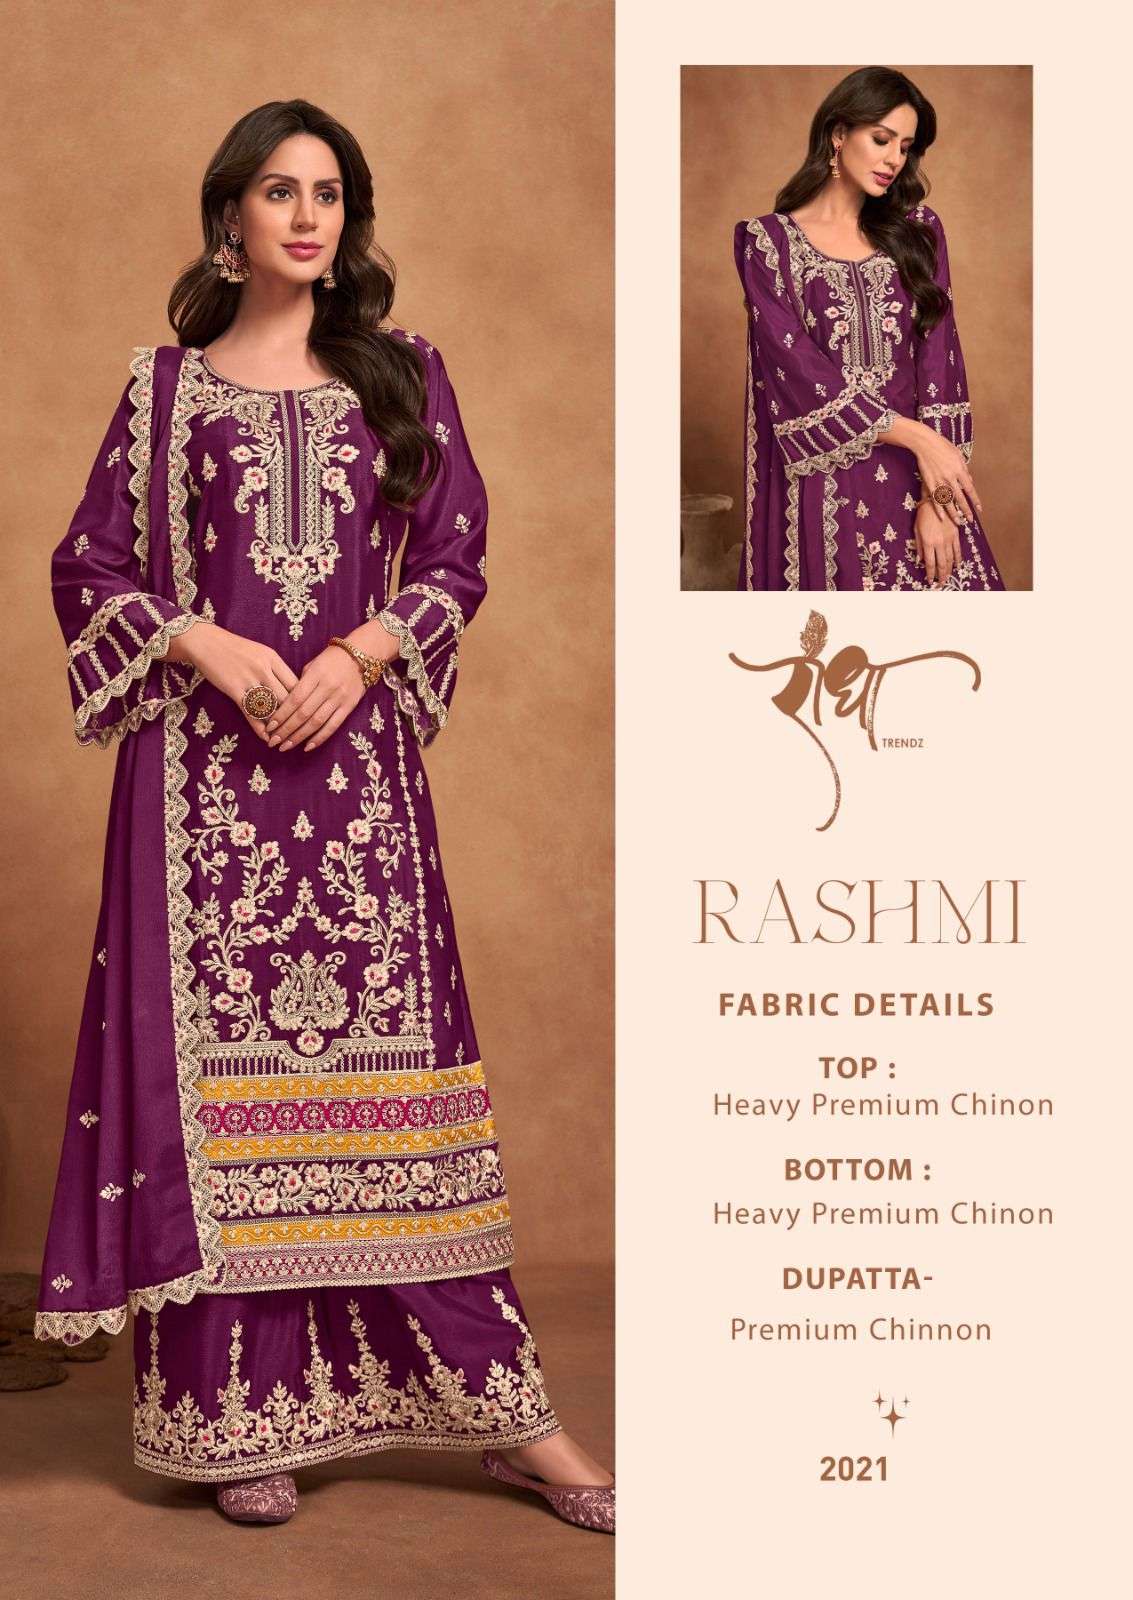 radha trendz catalogue rashmi 2021 series top heavy chinon  with heavy embroidary work free size stitched bottom heavy premium chinon readymade suit 